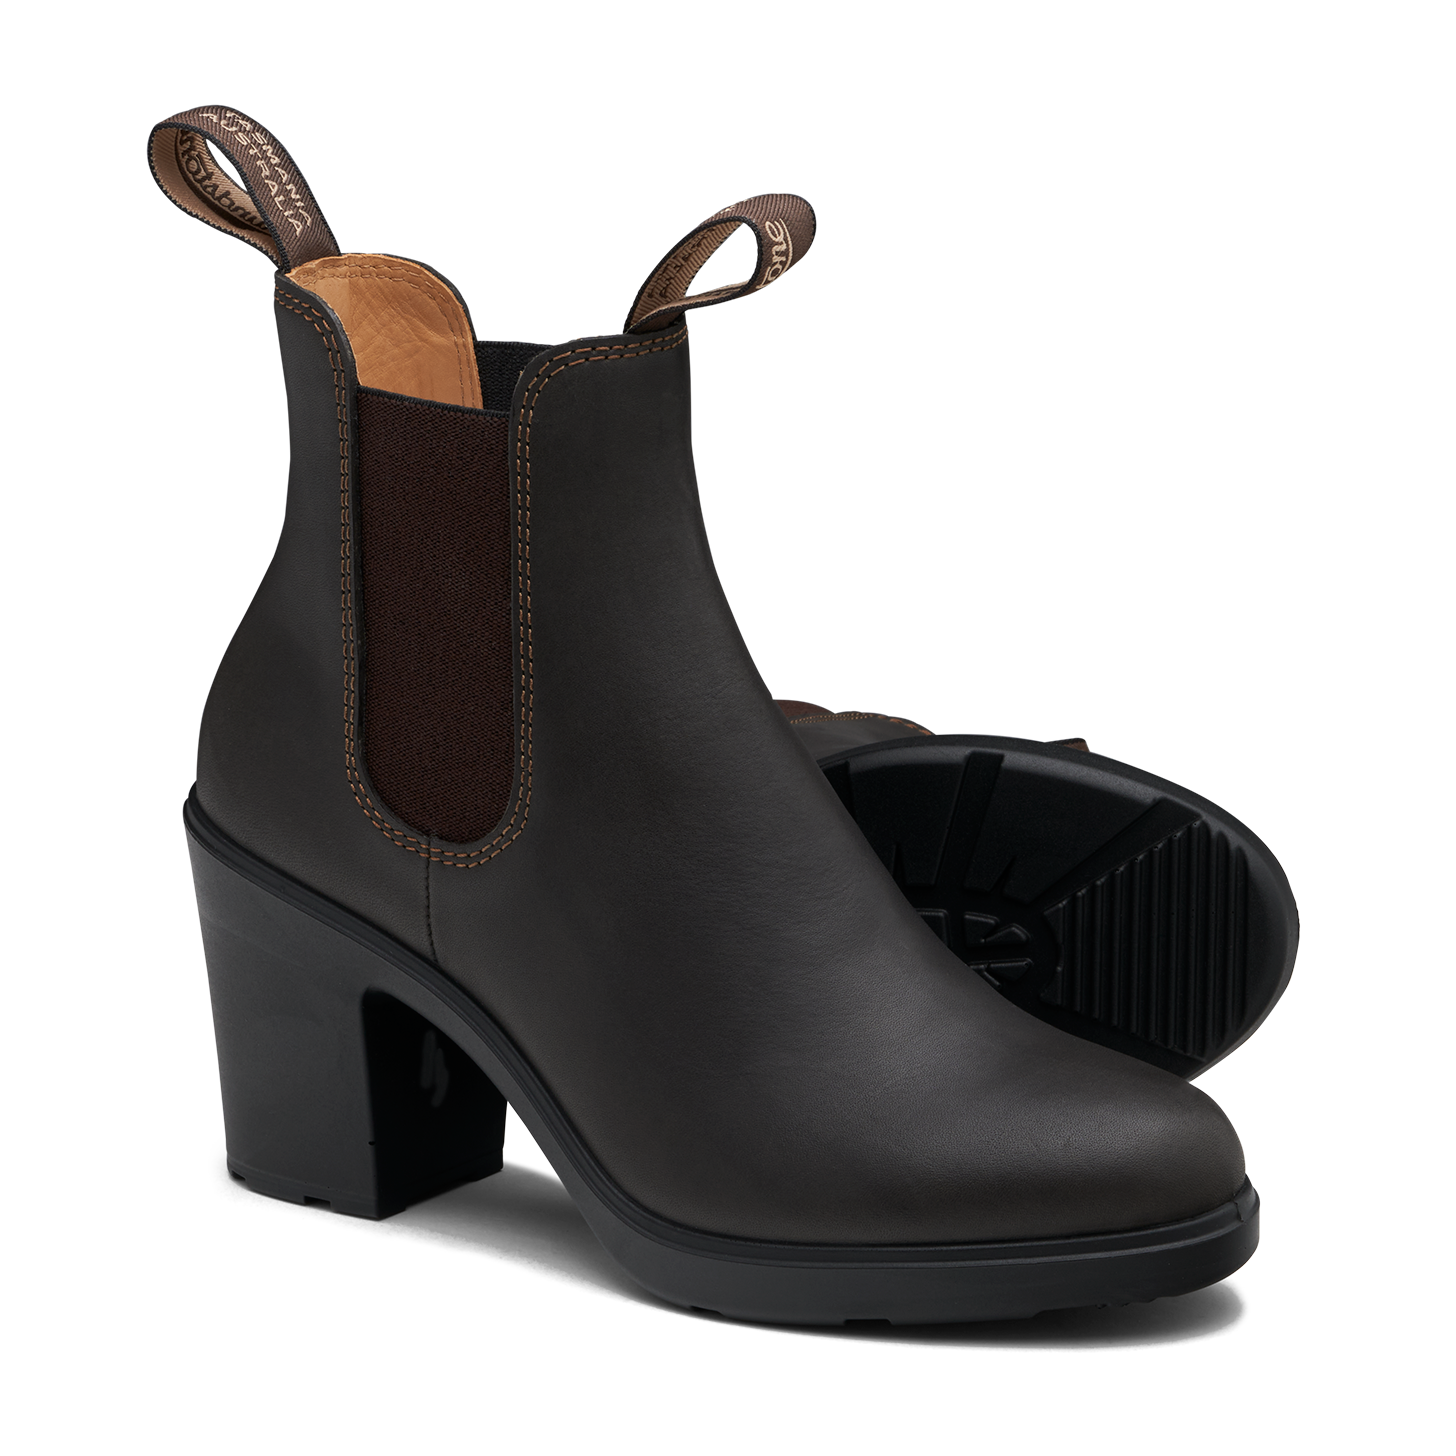 Blundstone #2366 - Women's High Heel Boot (Stout Brown)